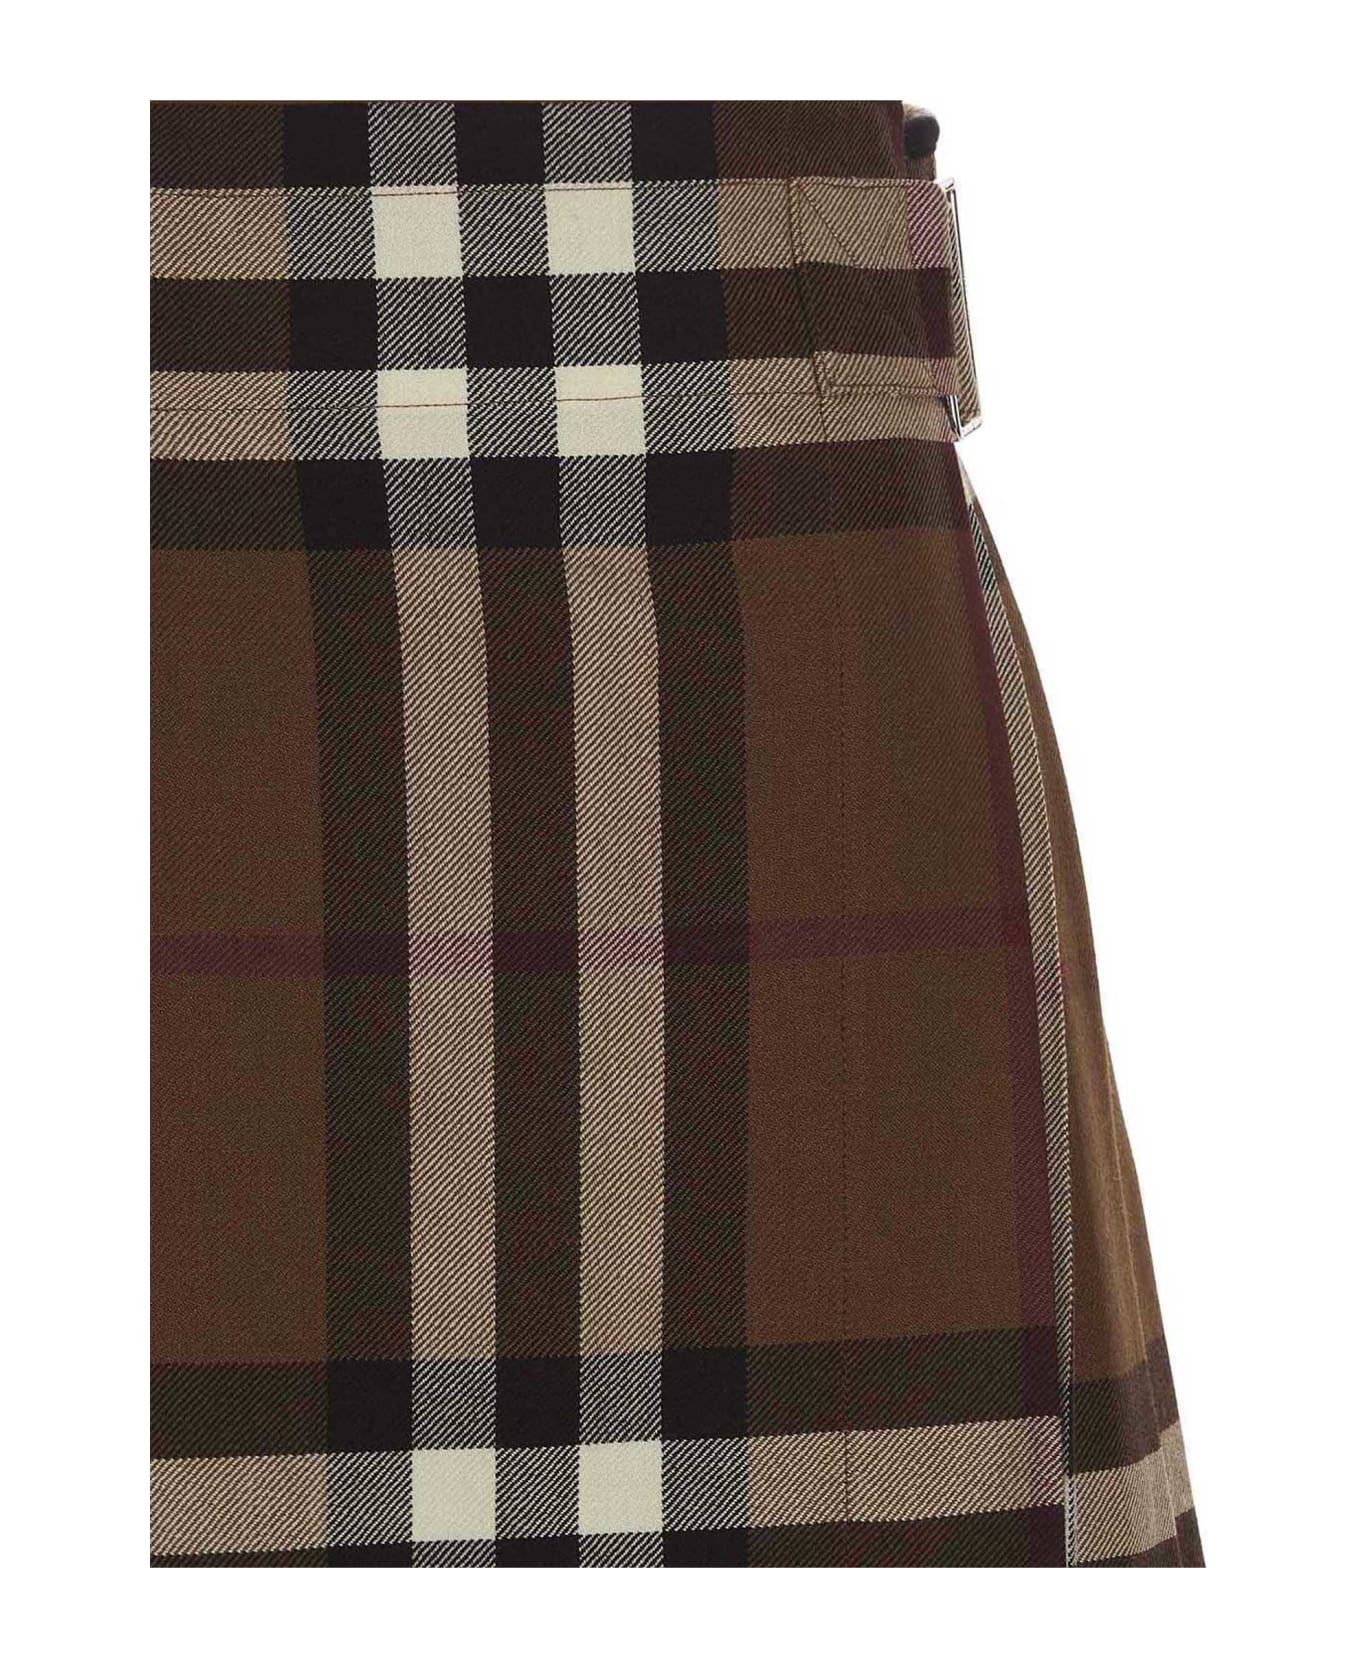 Burberry 'micaela' Skirt - Brown